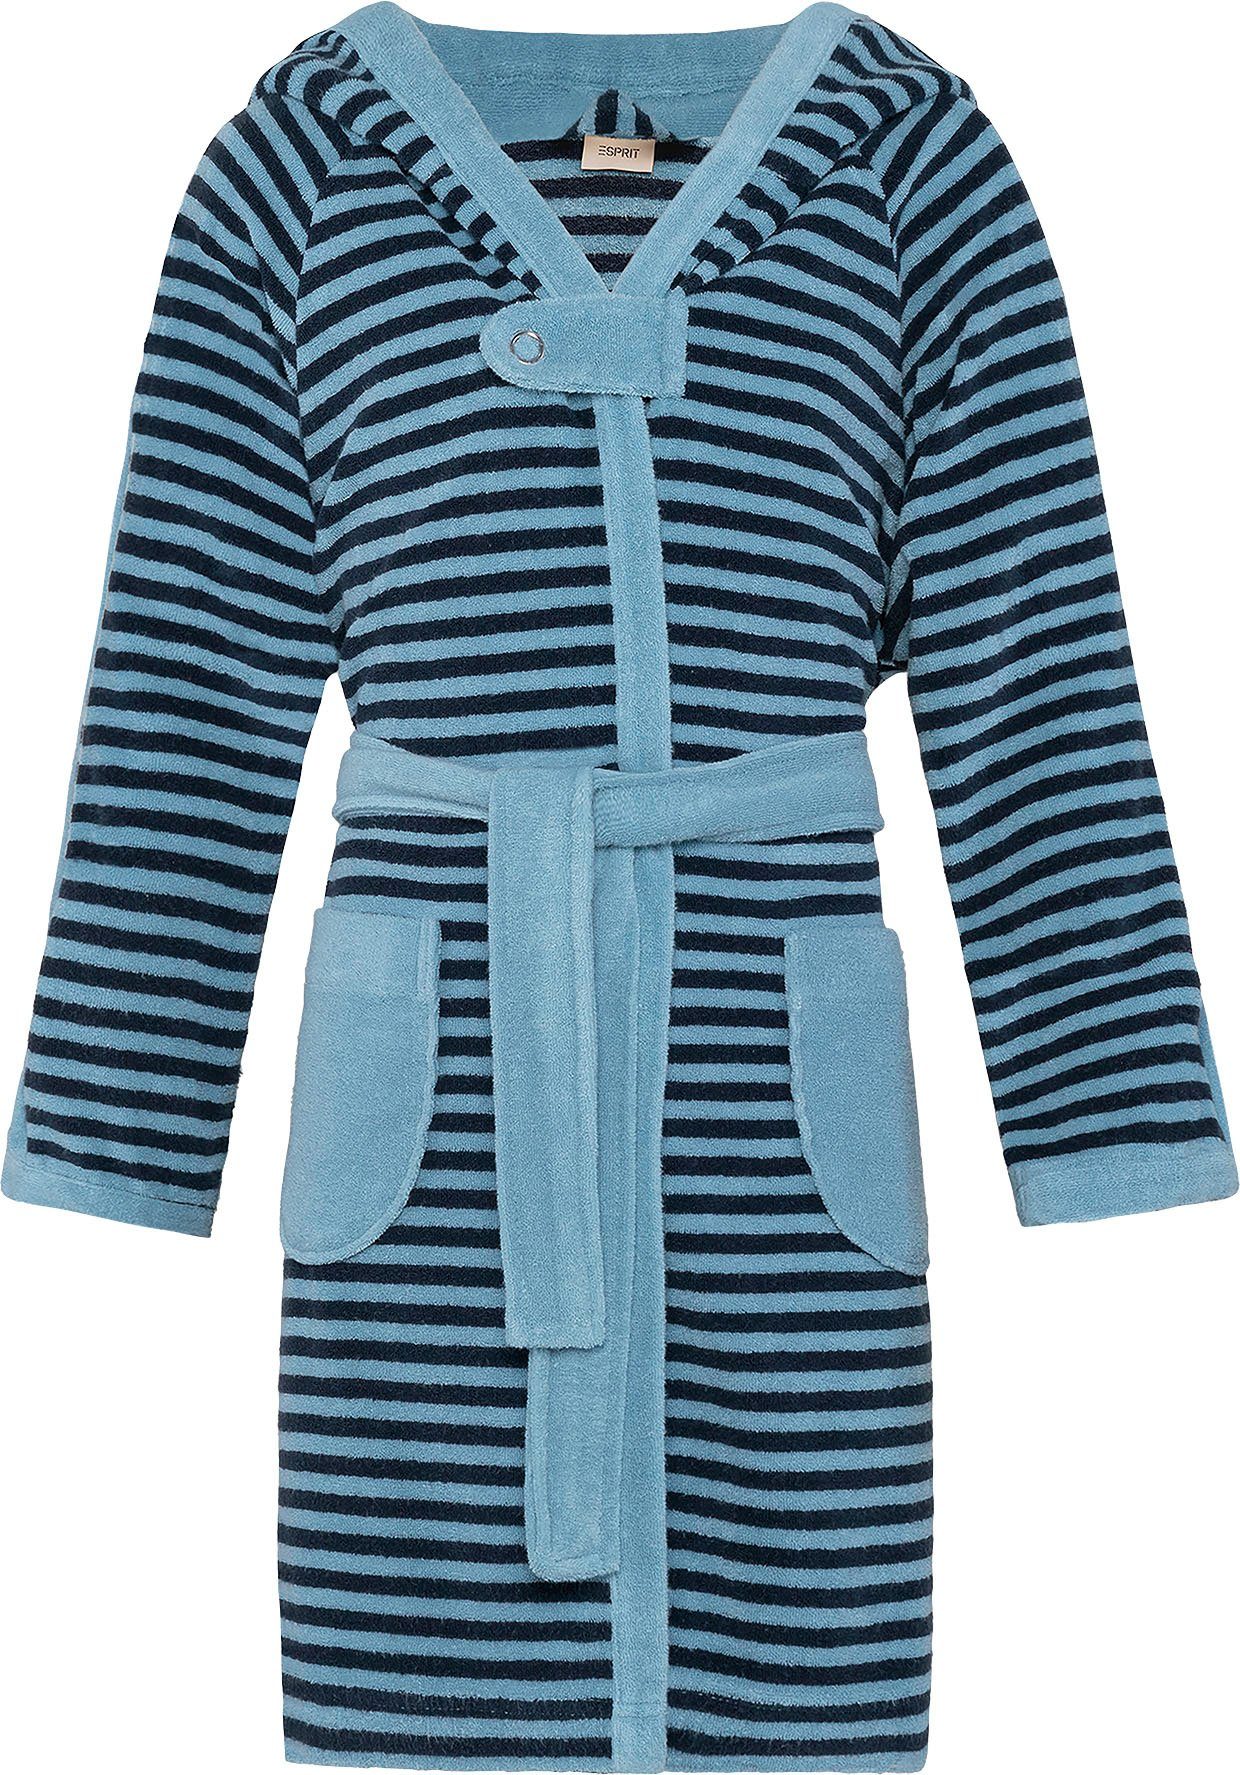 Esprit Kinderbademantel Zipfelmütze mit Kapuze, Kurzform, Stripped sky blue Little Hoody, Gürtel, Rundstrickware